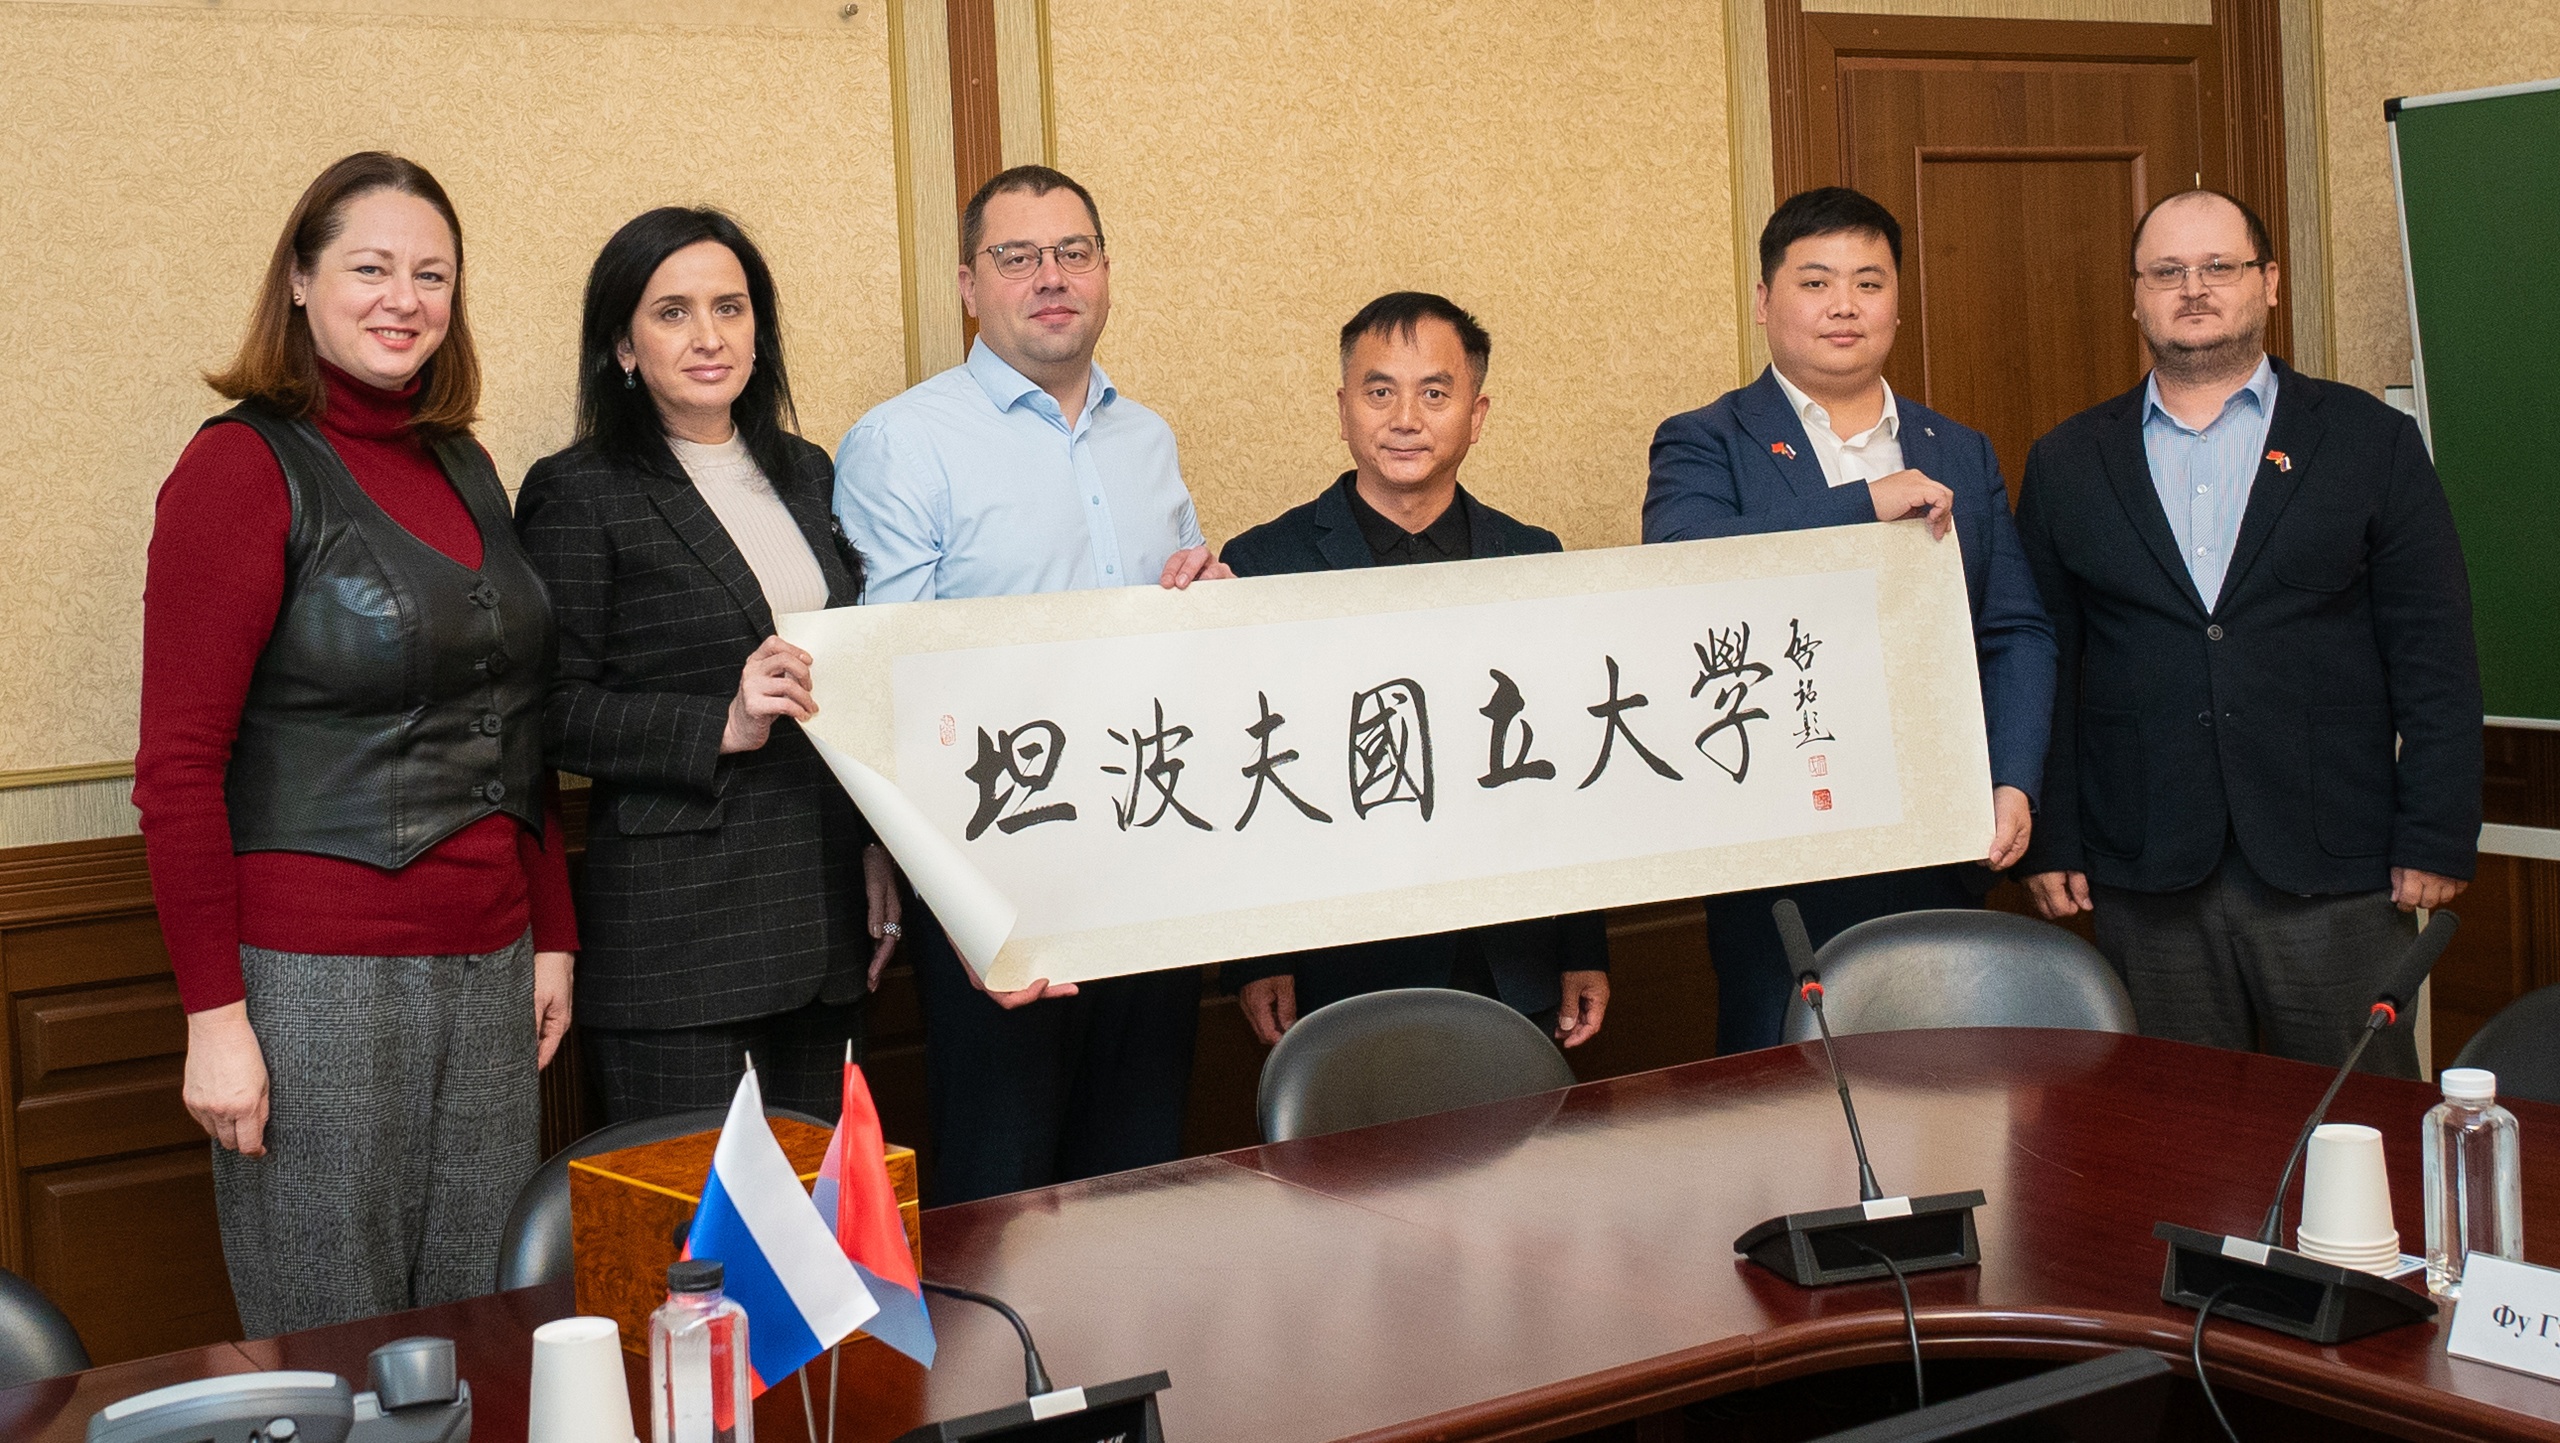 Державинский посетила делегация компании «Ци Мин культура» из КНР фото анонса